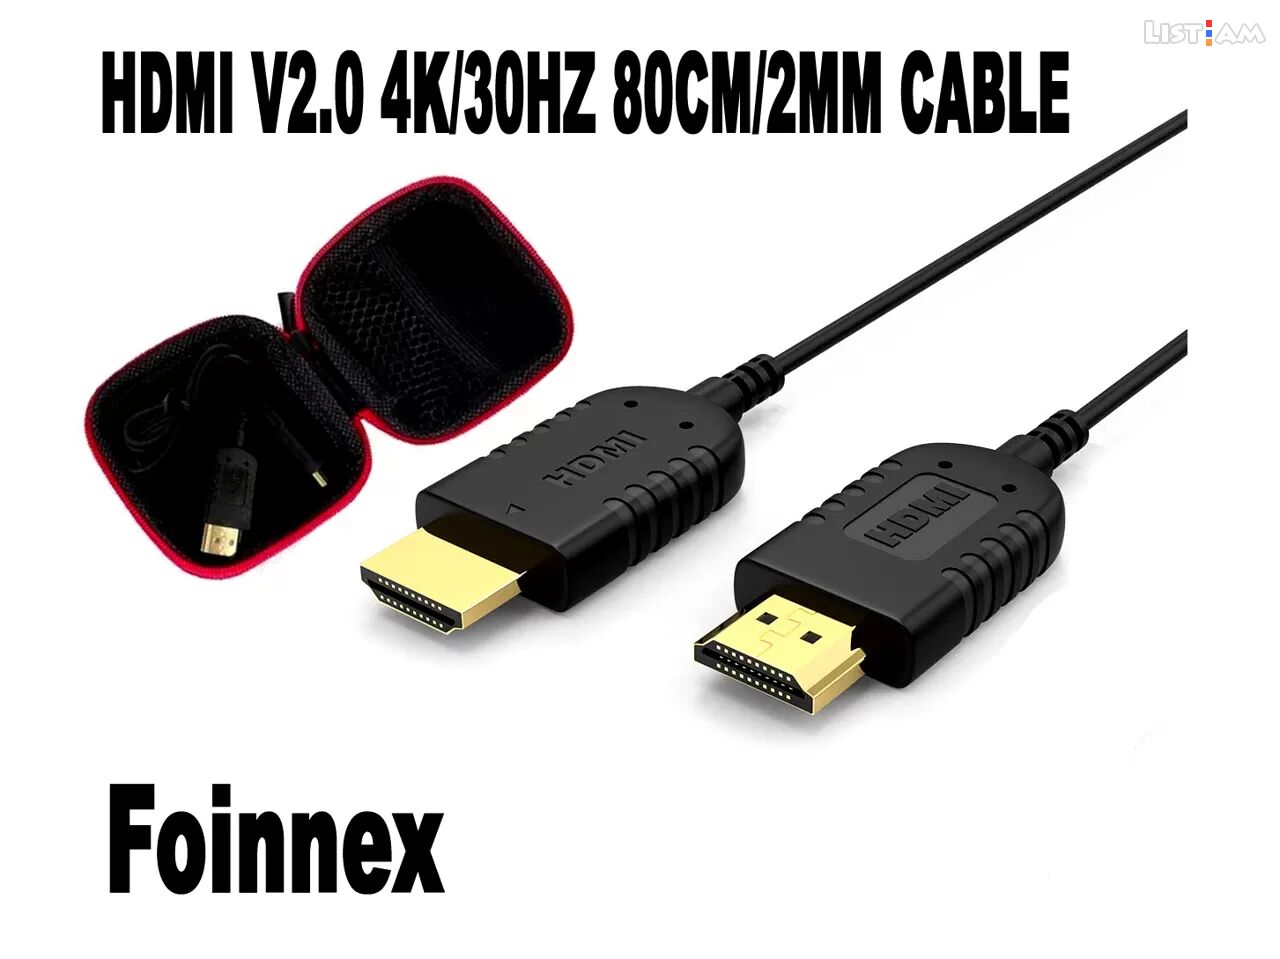 HDMI Cable V2.0